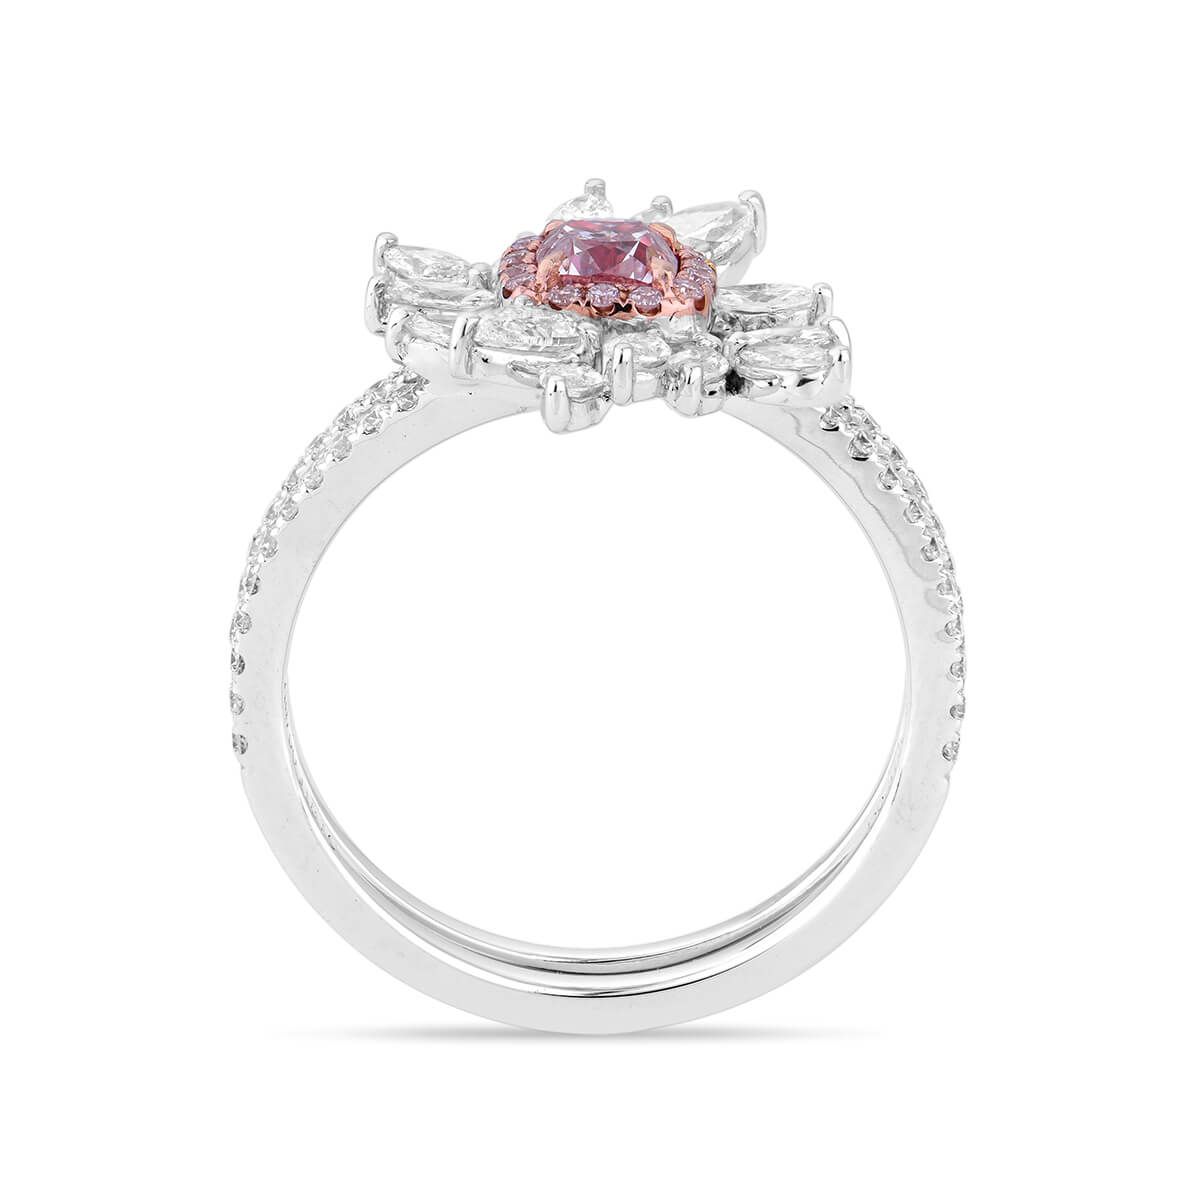 Very Light Pink Diamond Ring, 1.27 Ct. TW, Cushion shape, GIA Certified, 2181725710